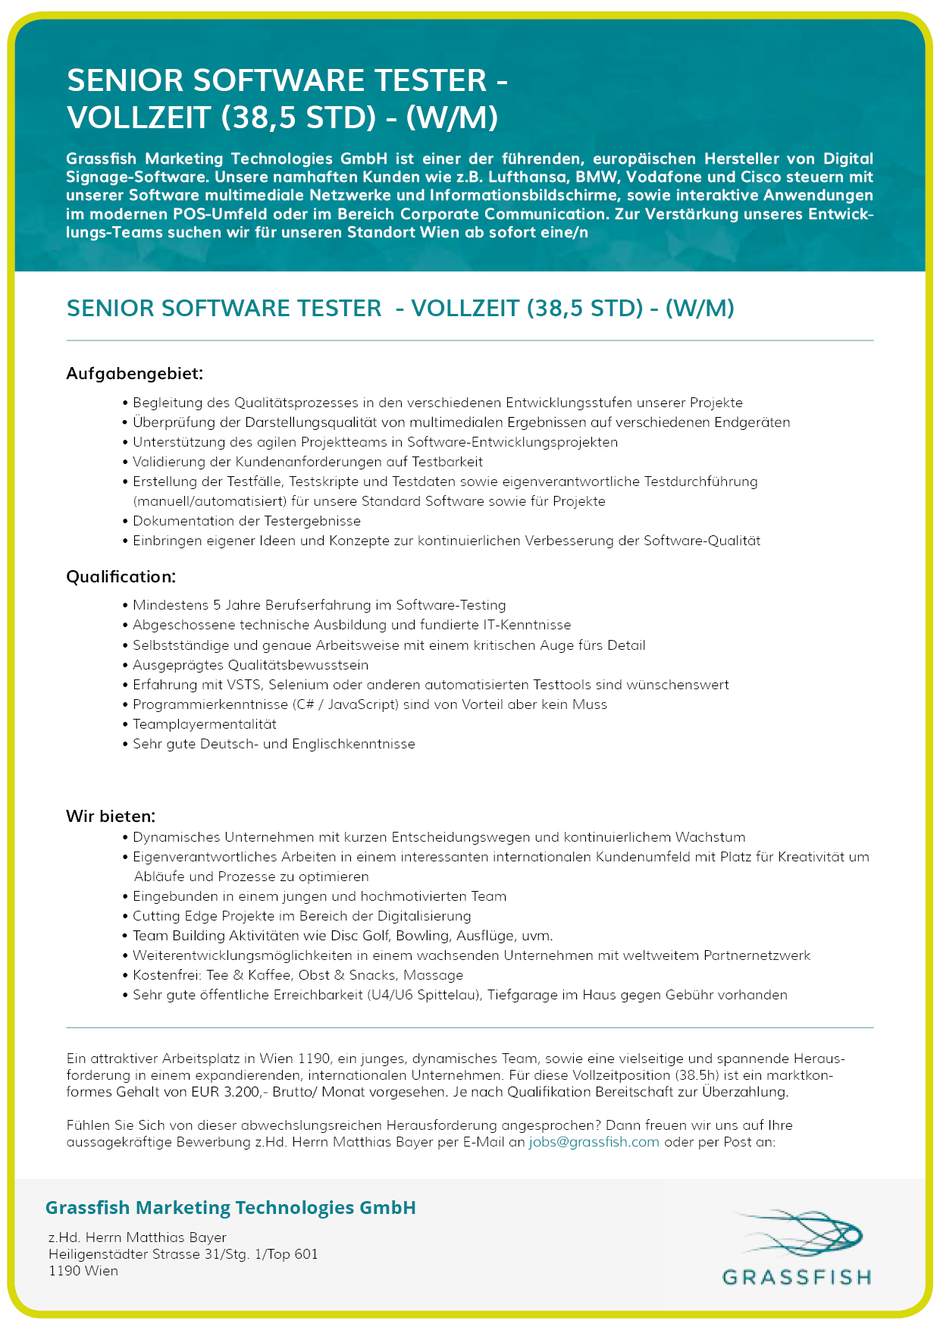 Software Developer Jobs - Senior Software Tester - Grassfish Marketing Technologies - Wien